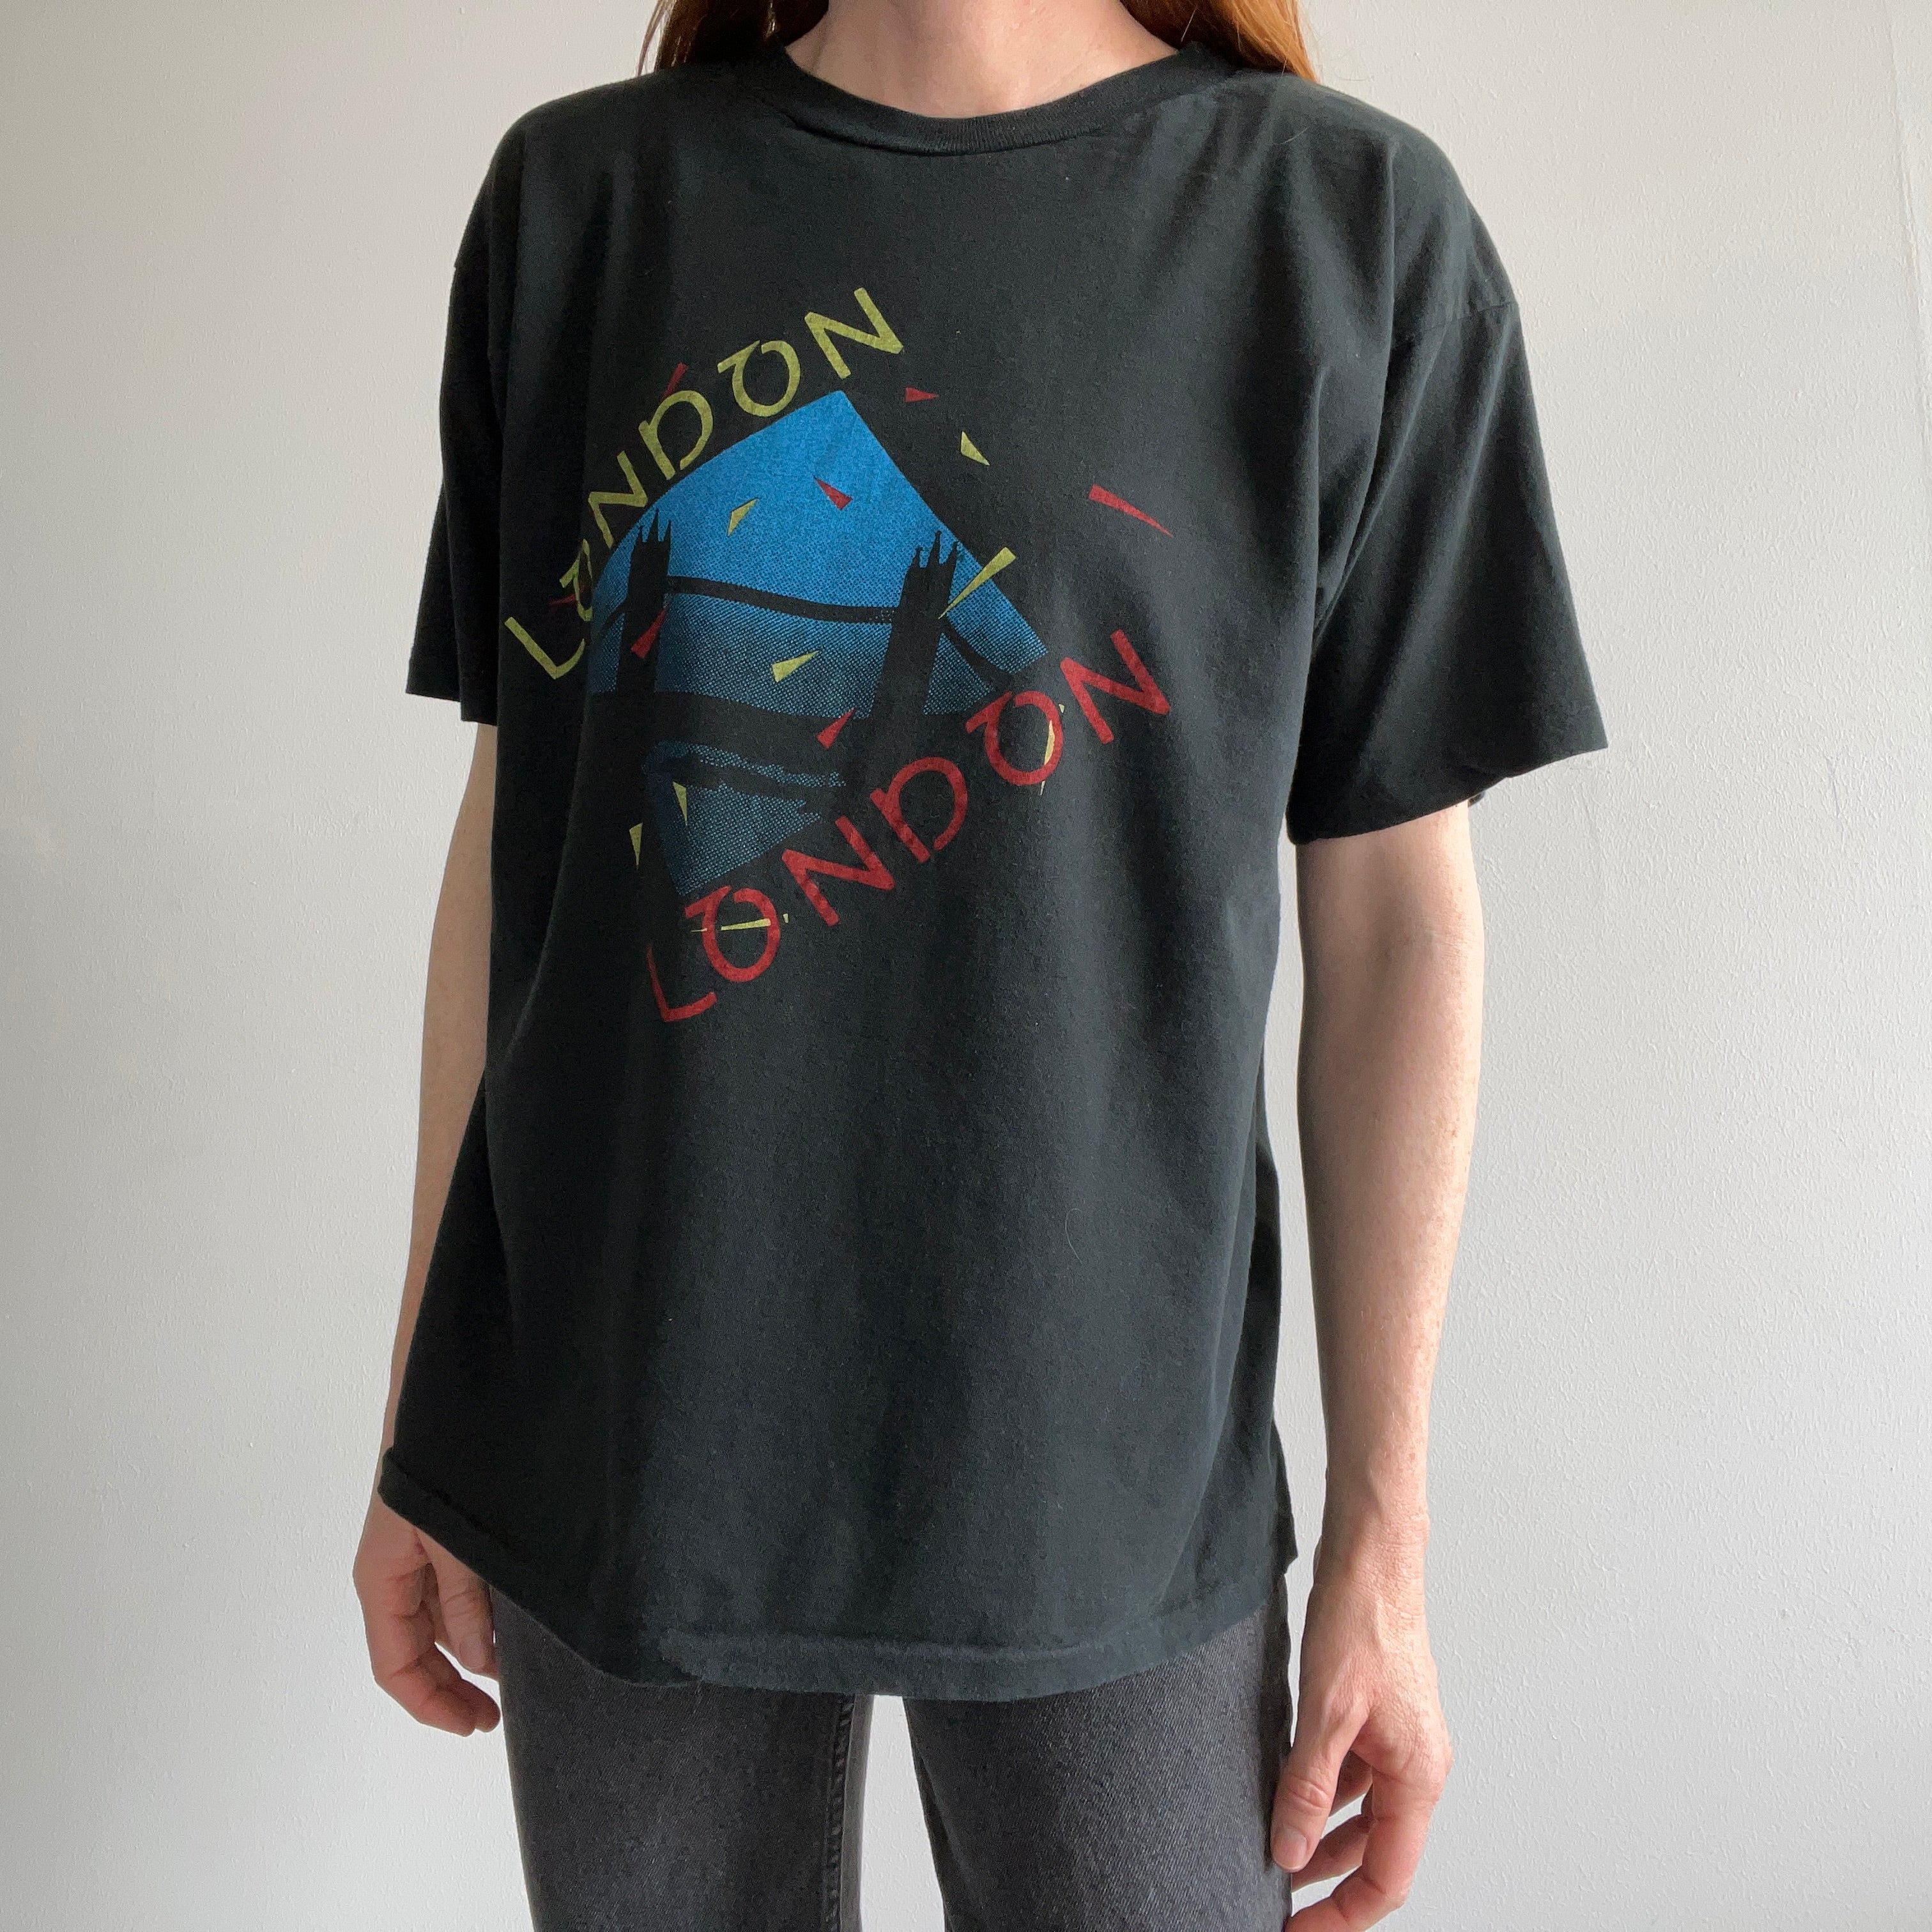 1990s London Tourist T-Shirt